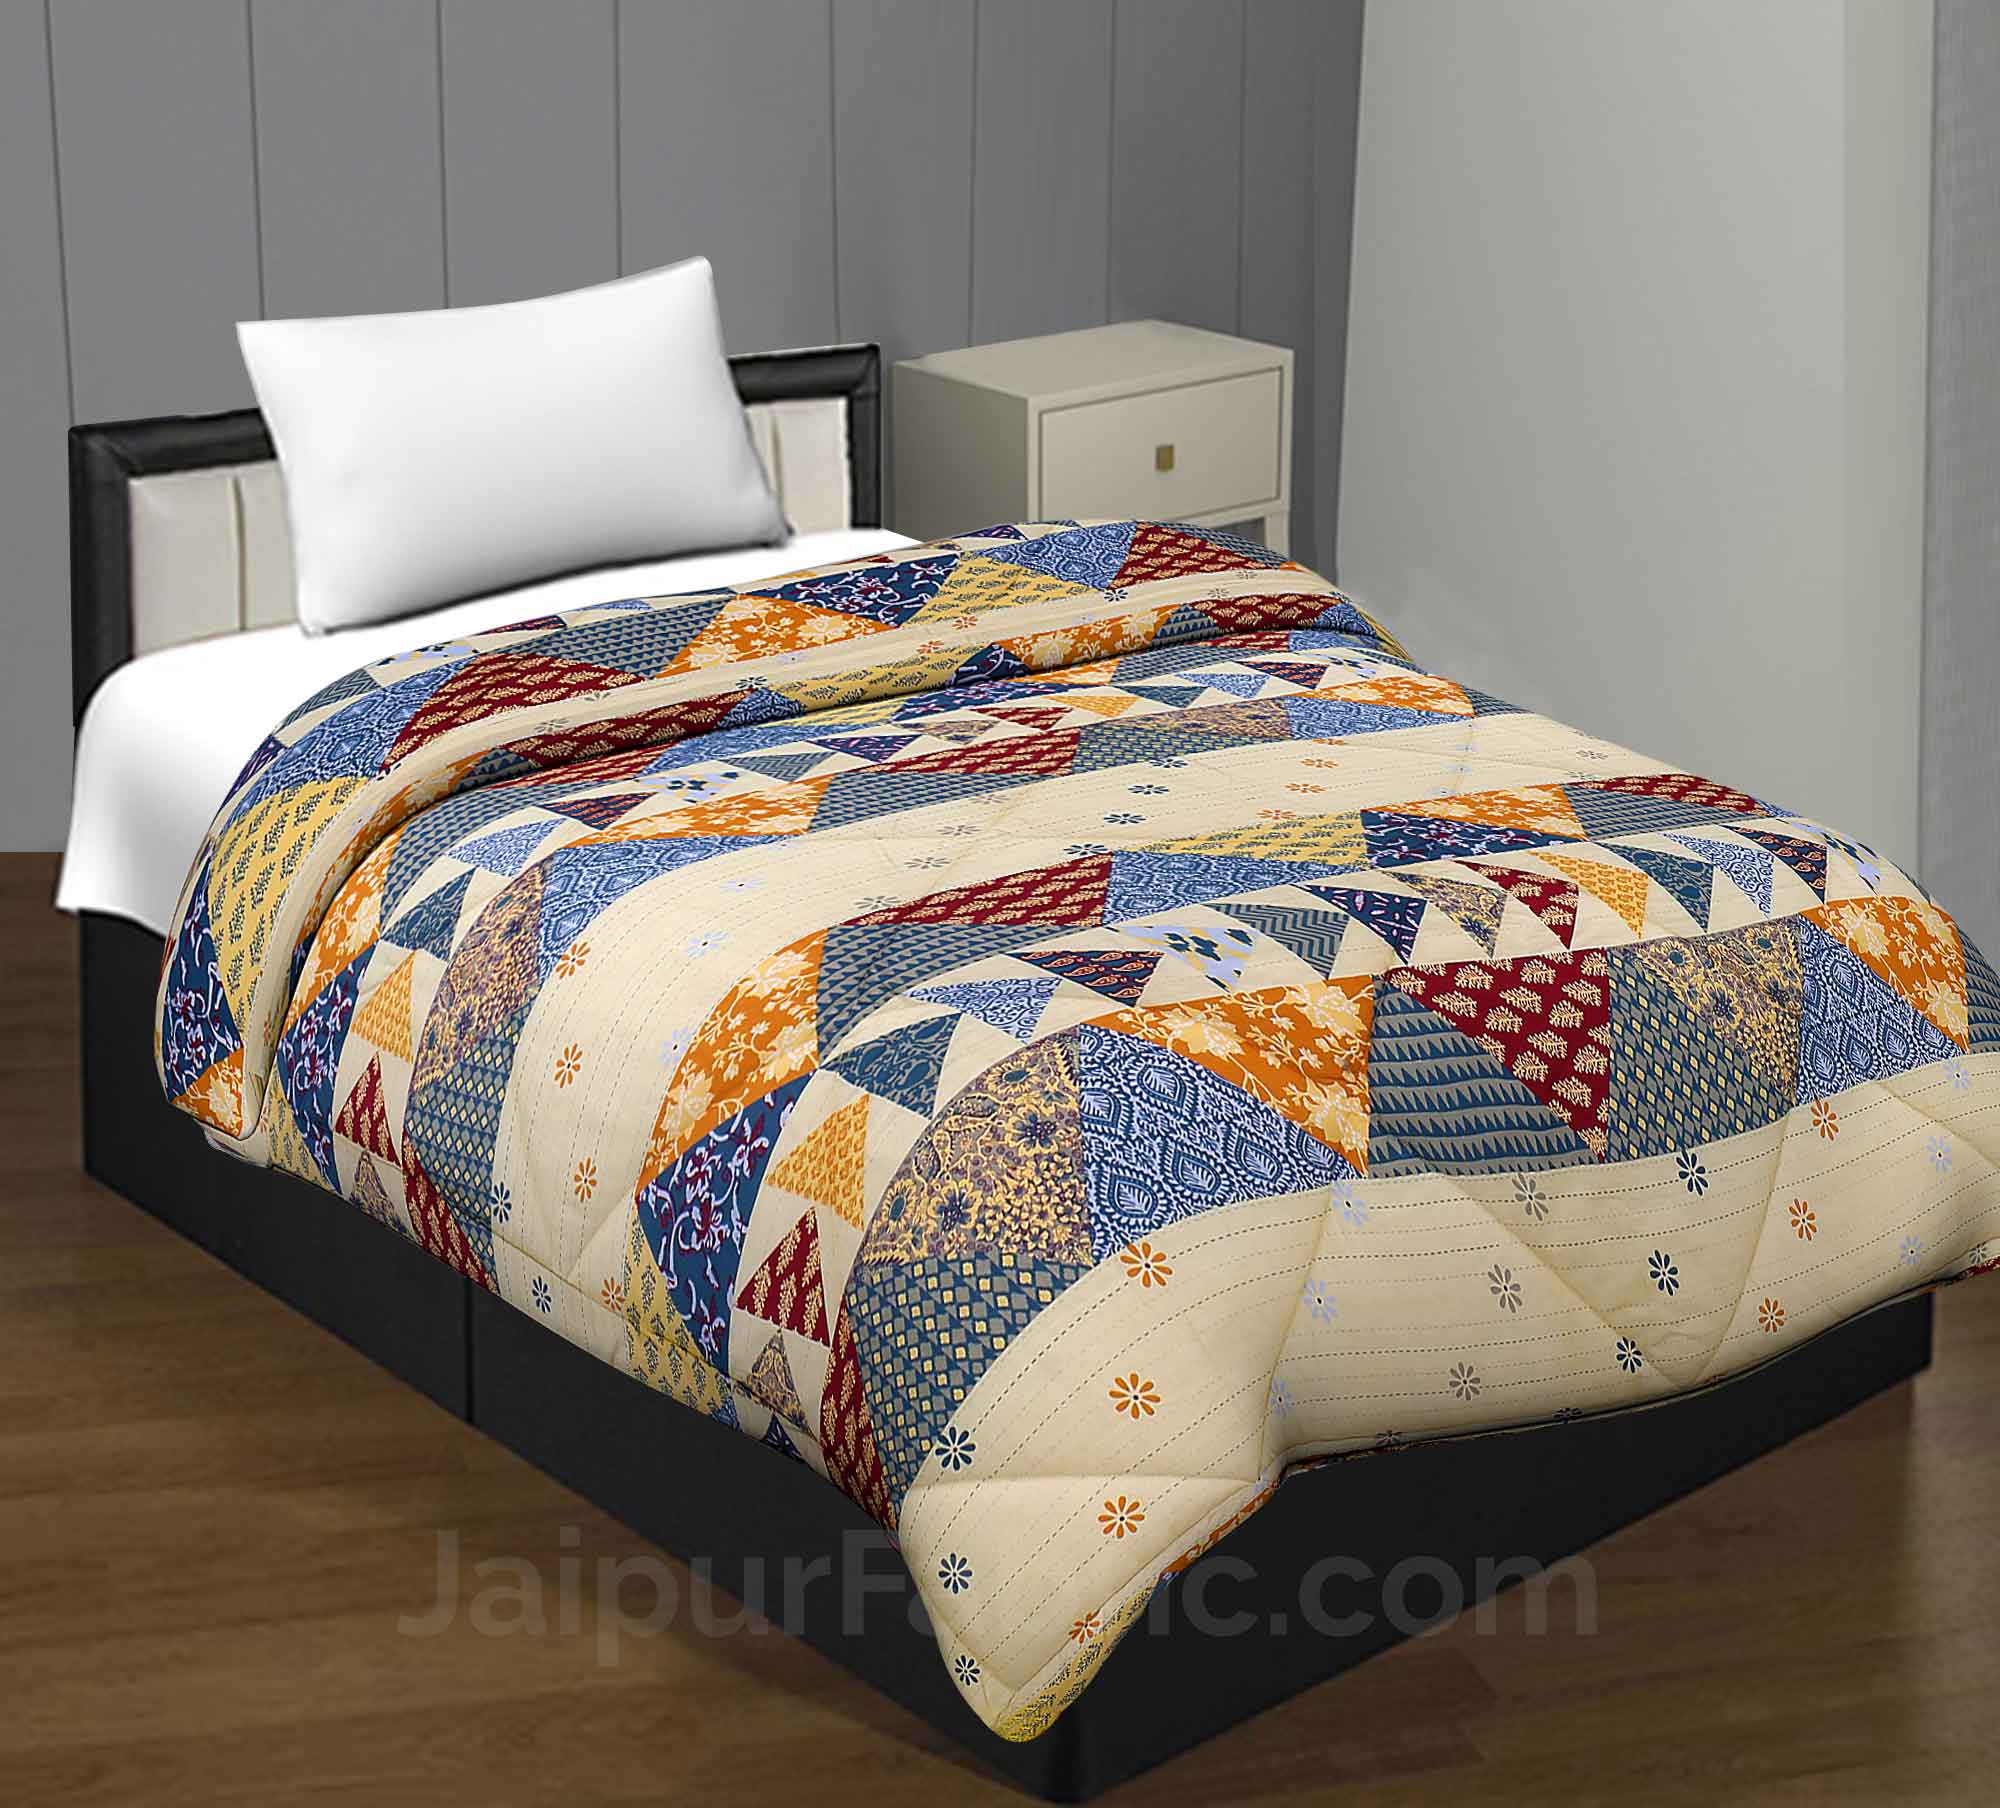 Barmeri Pastel Single Bed Comforter